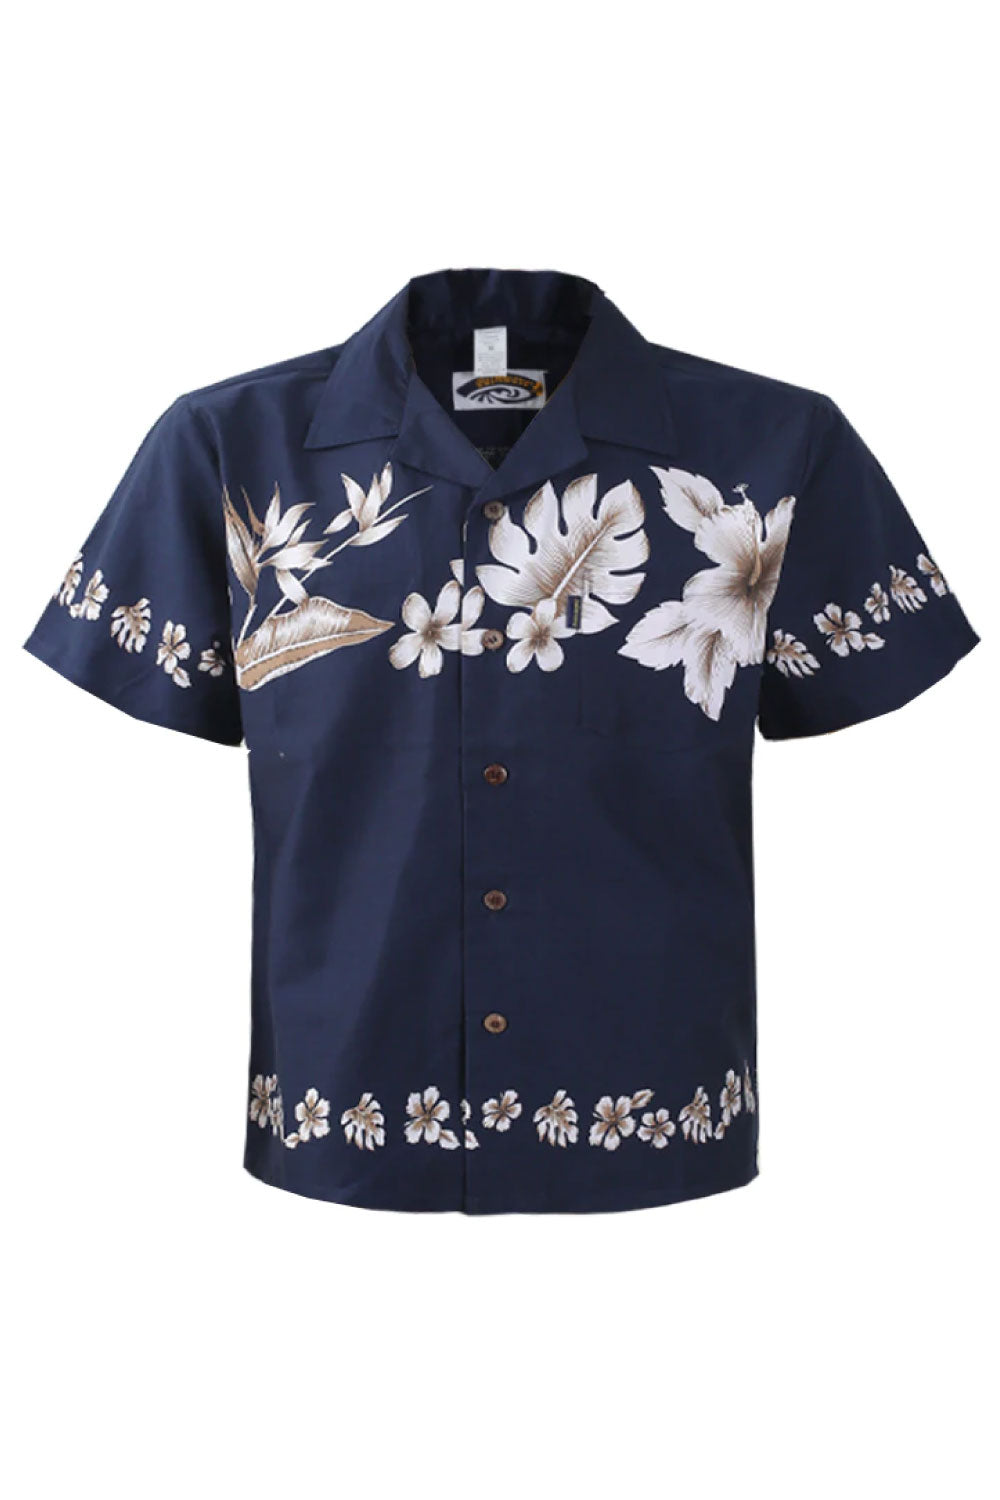 Image of the front of Palmwave's Navy Cross Aloha Men's Shirt.